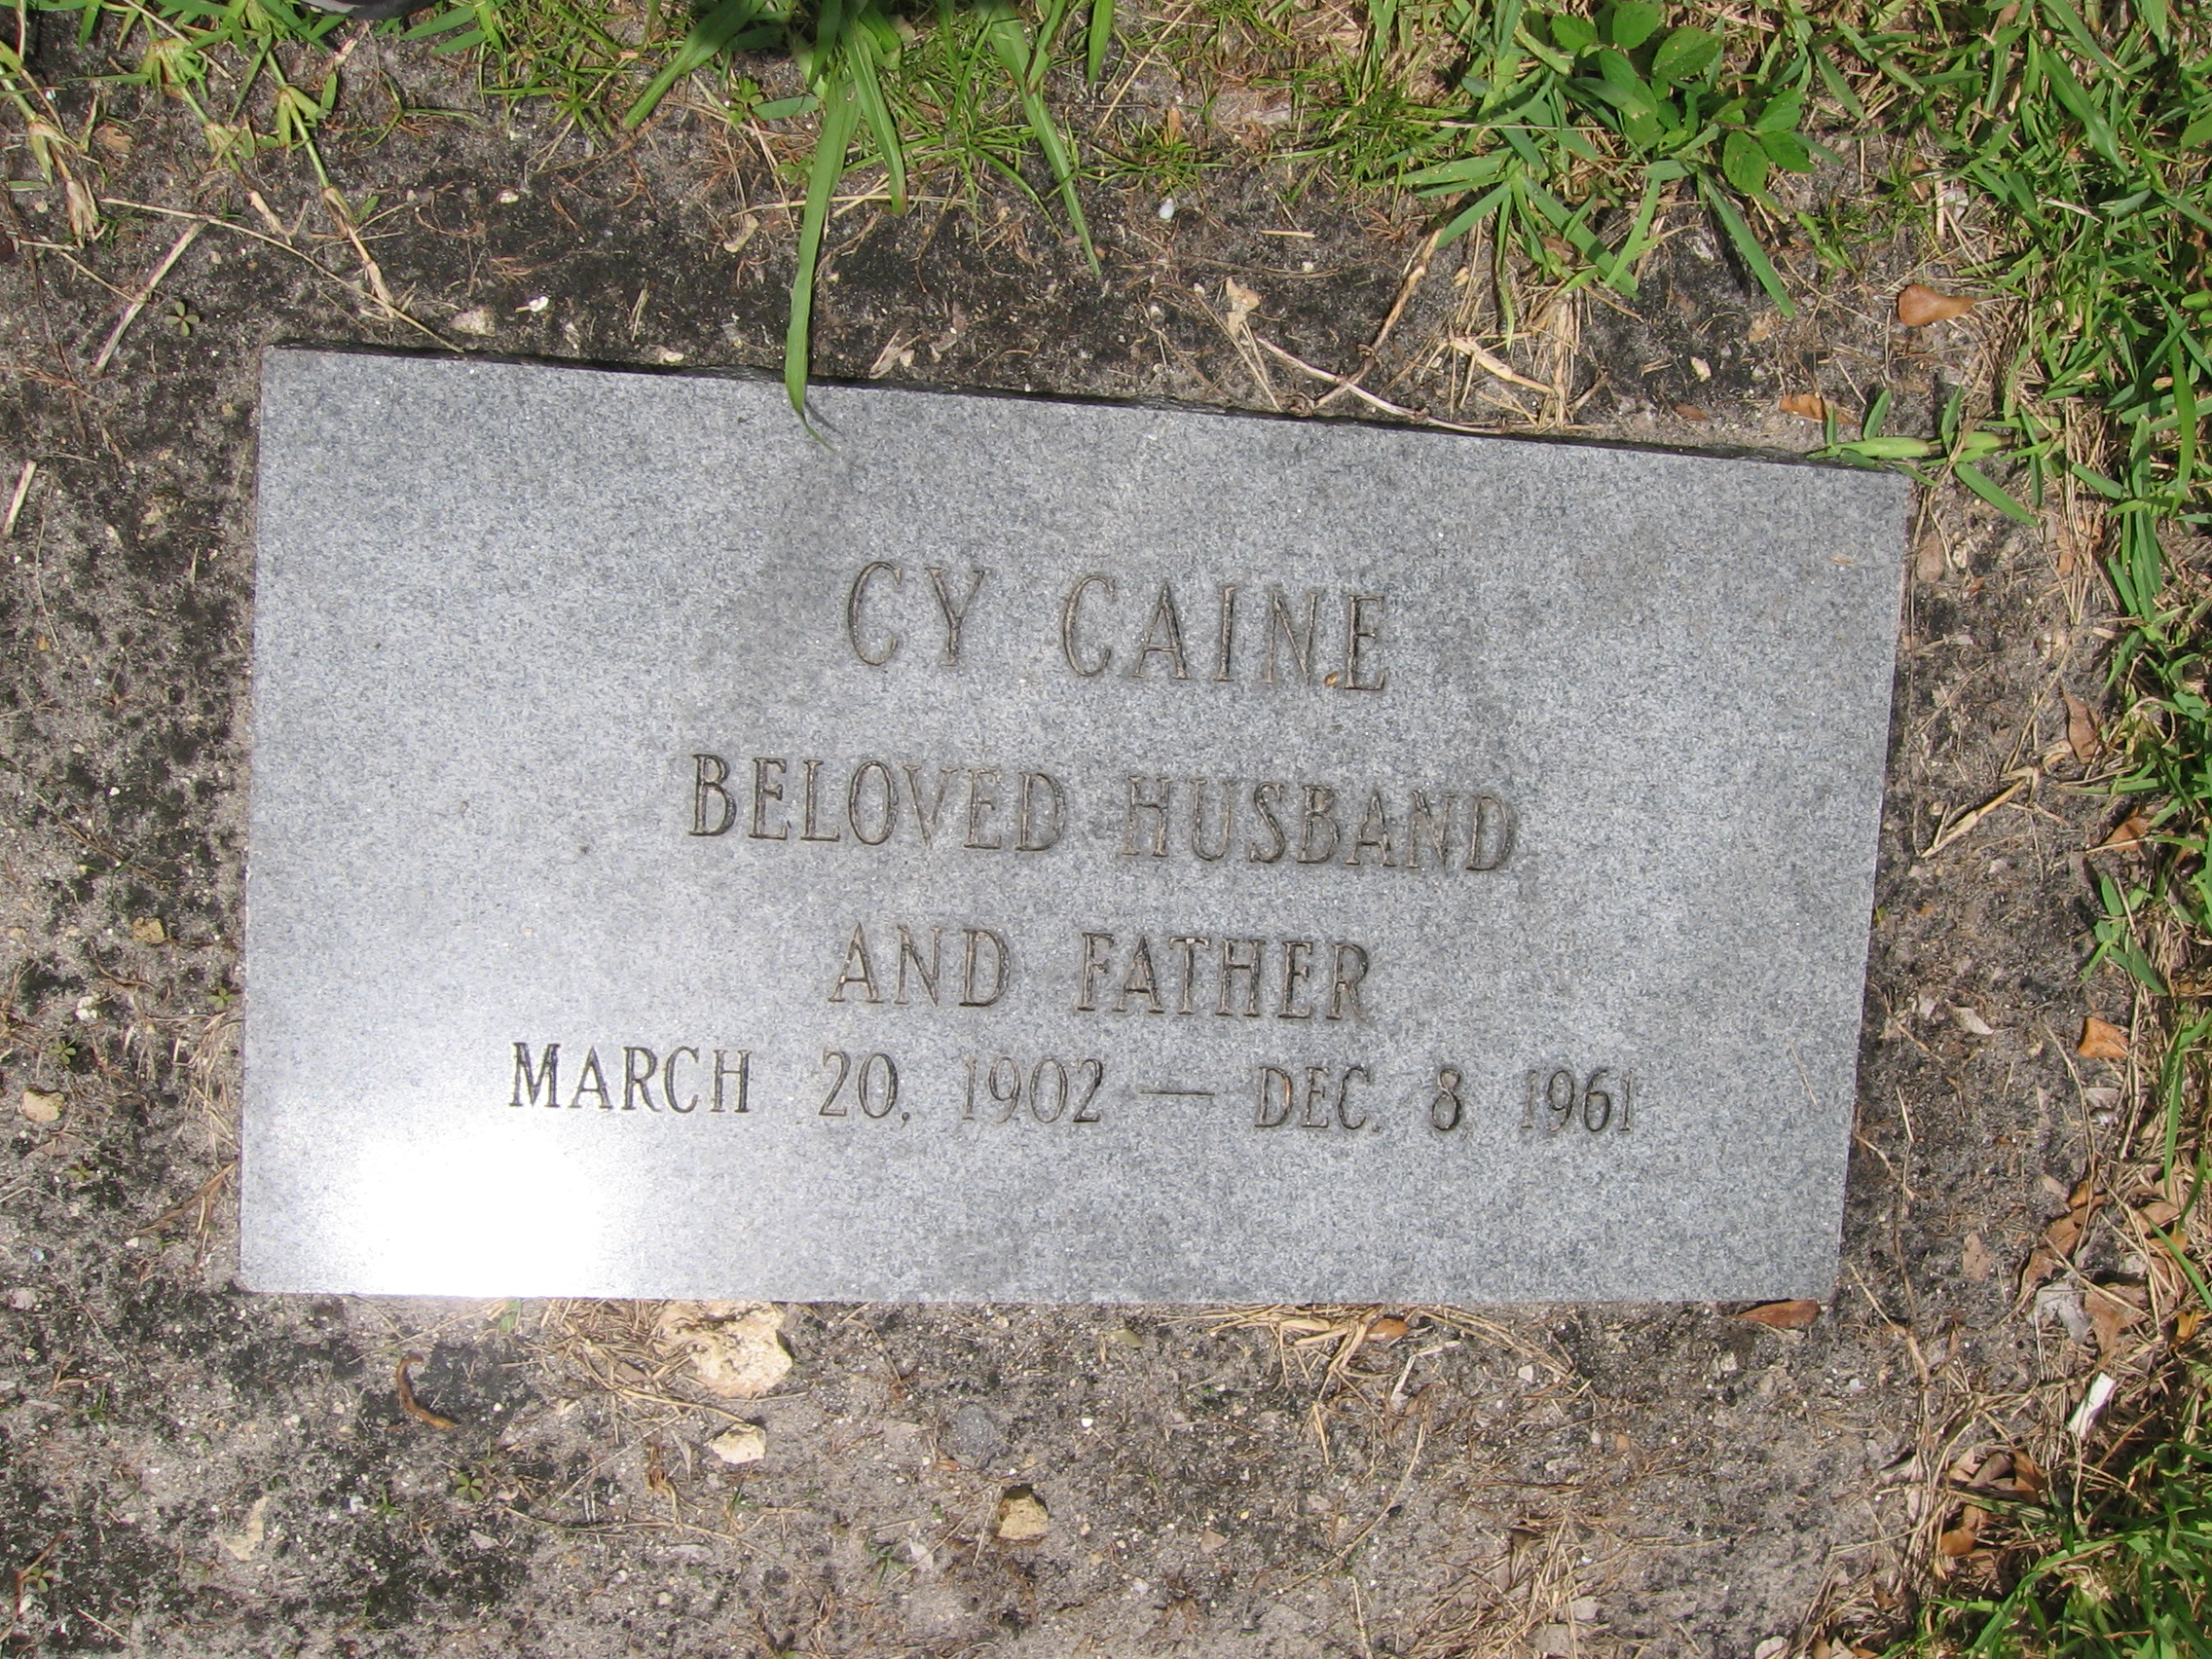 Cy Caine